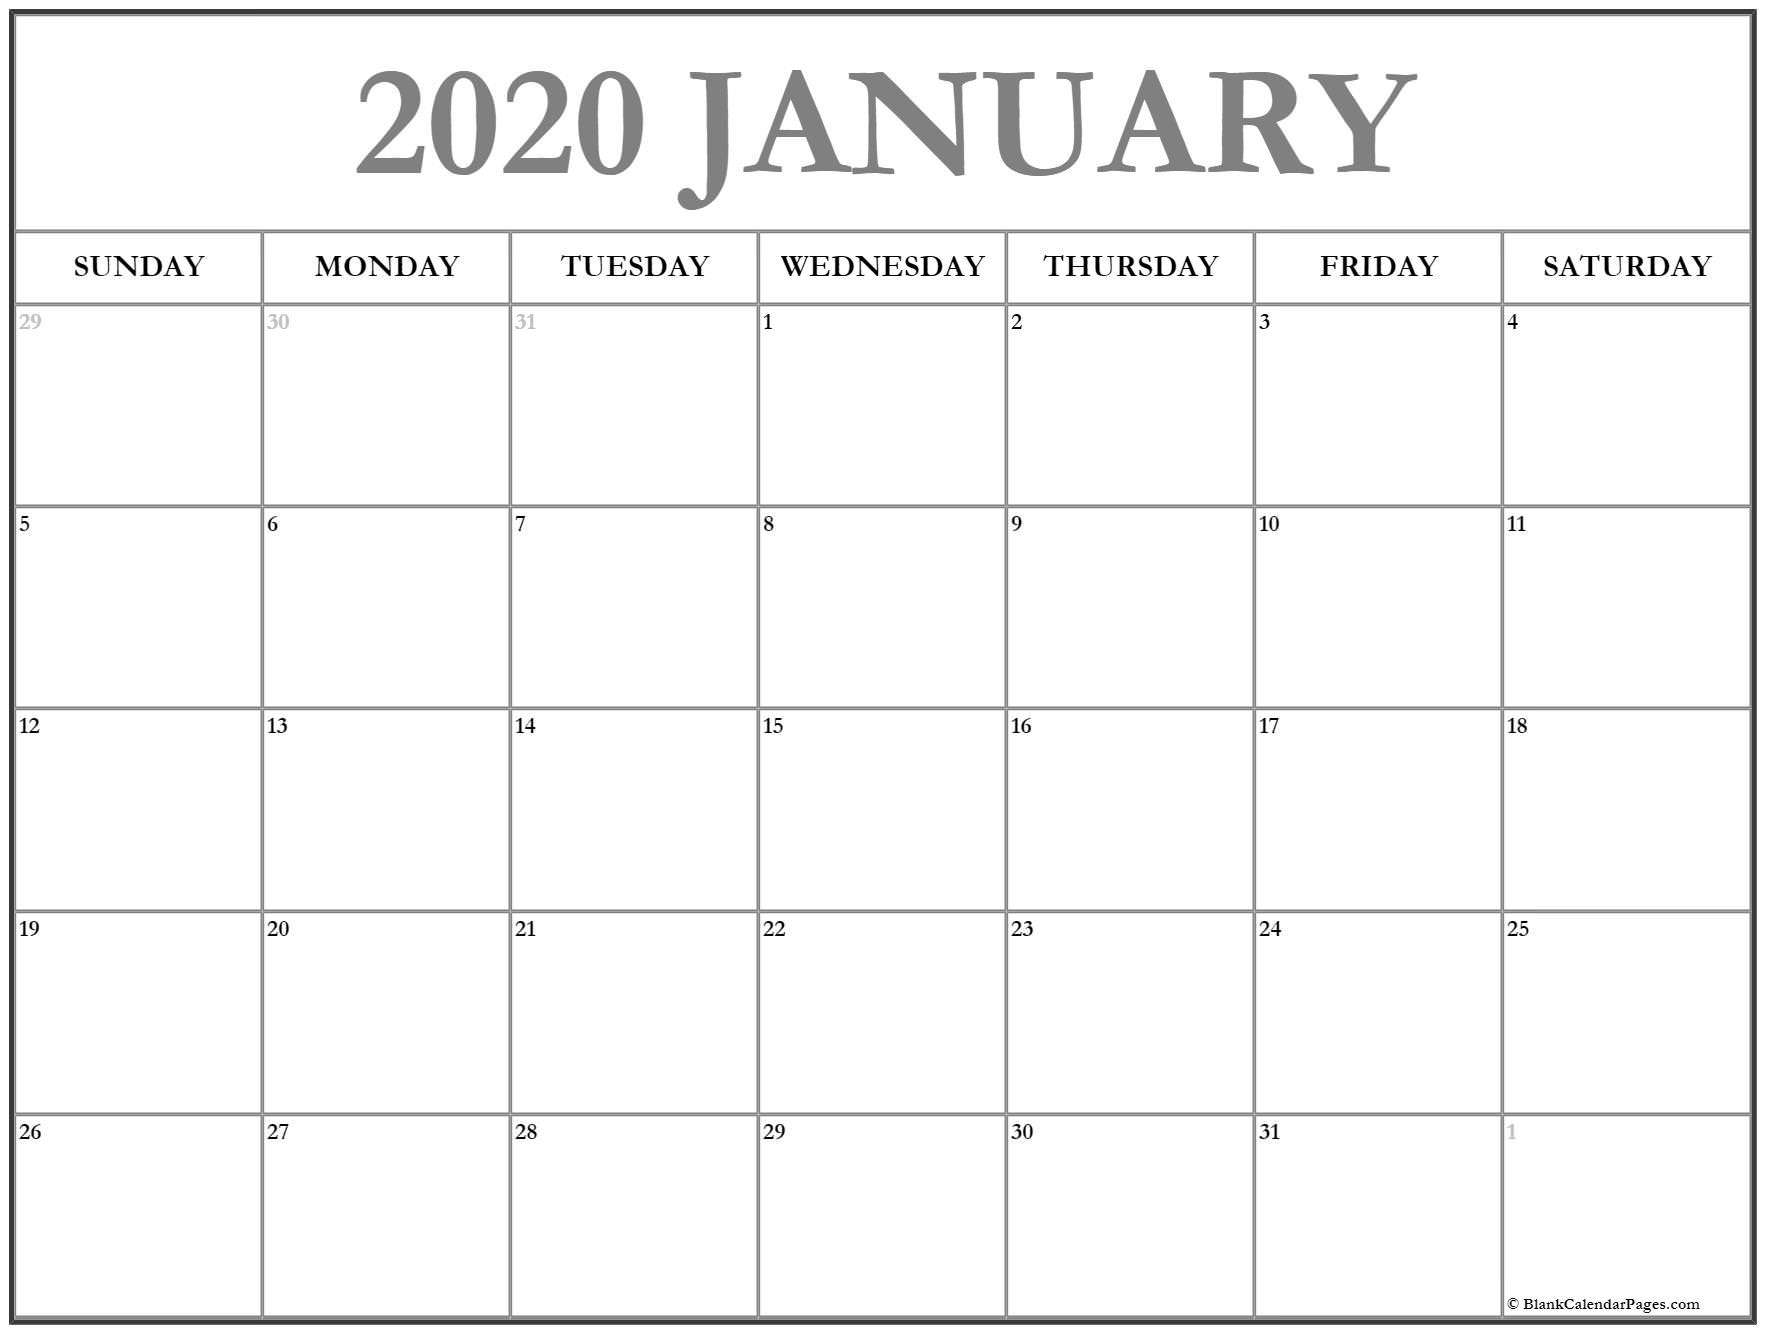 January 2020 Calendar | Free Printable Monthly Calendars-January 2020 Canadian Calendar